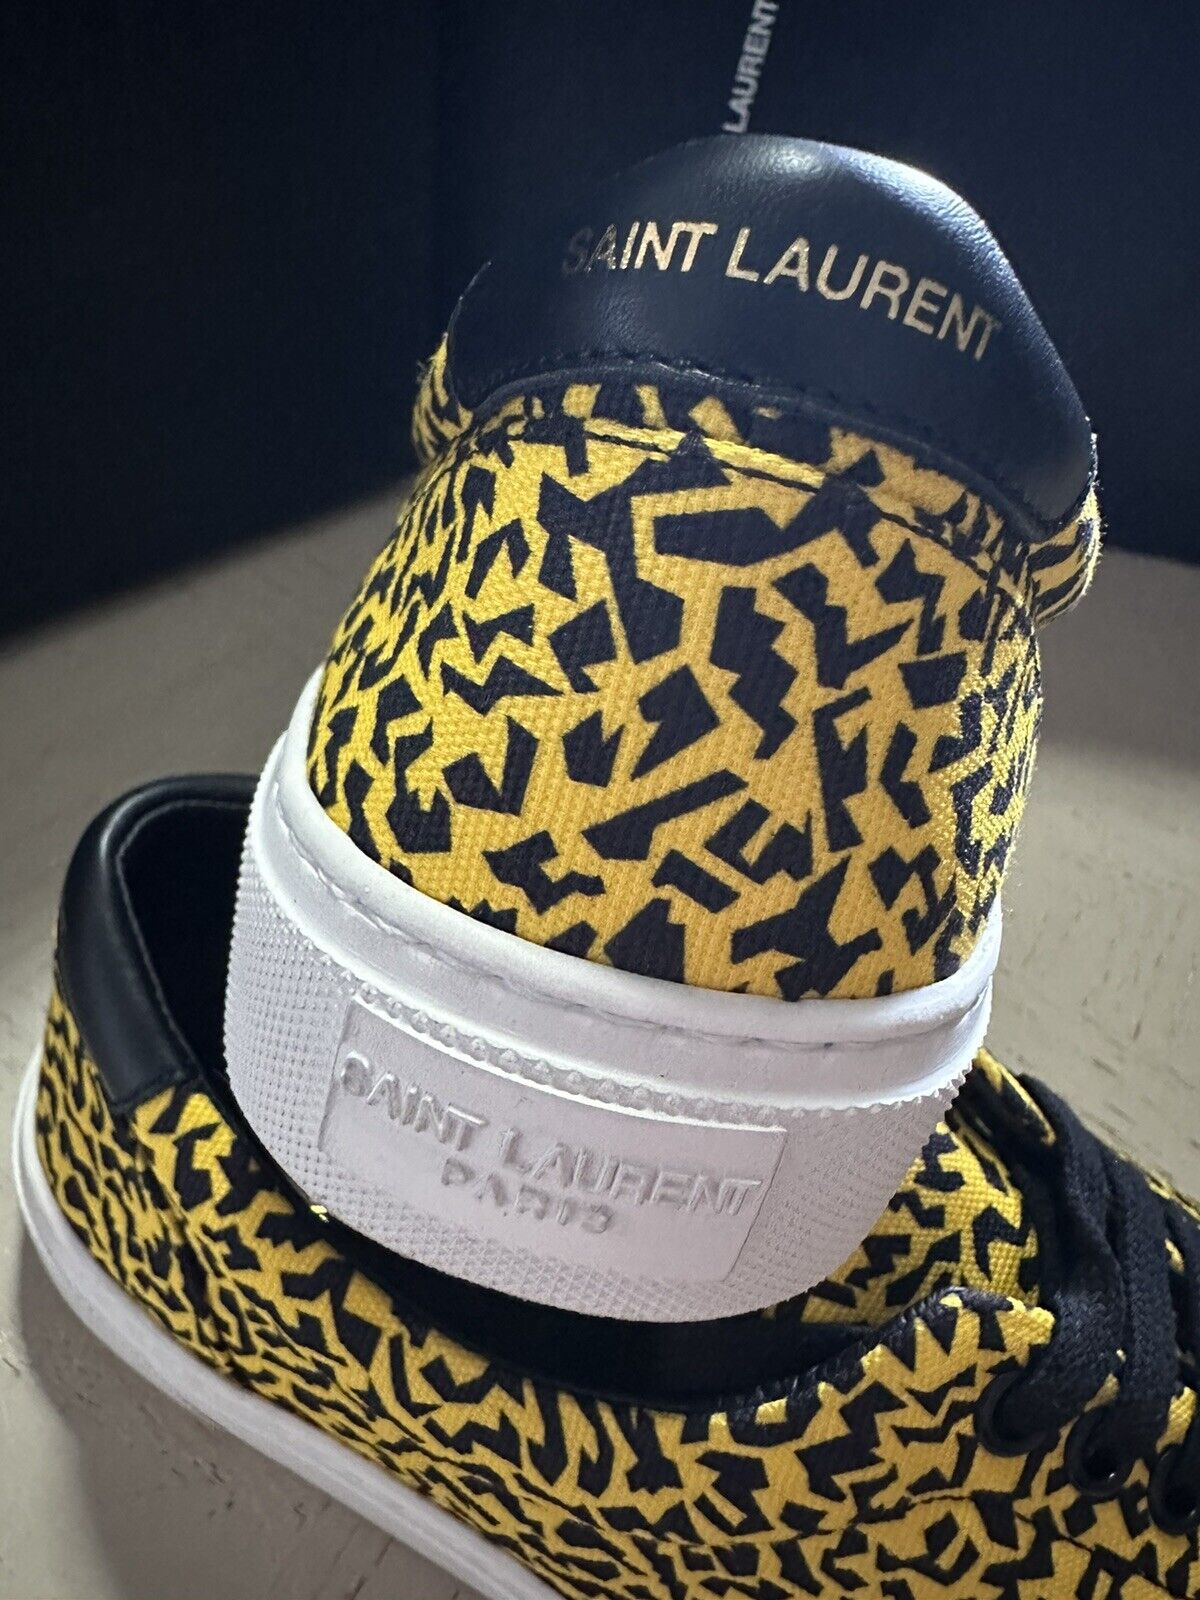 NIB Saint Laurent Men’s Canvas Sneakers Shoes Yellow/Black 9 US/42 Eu Italy